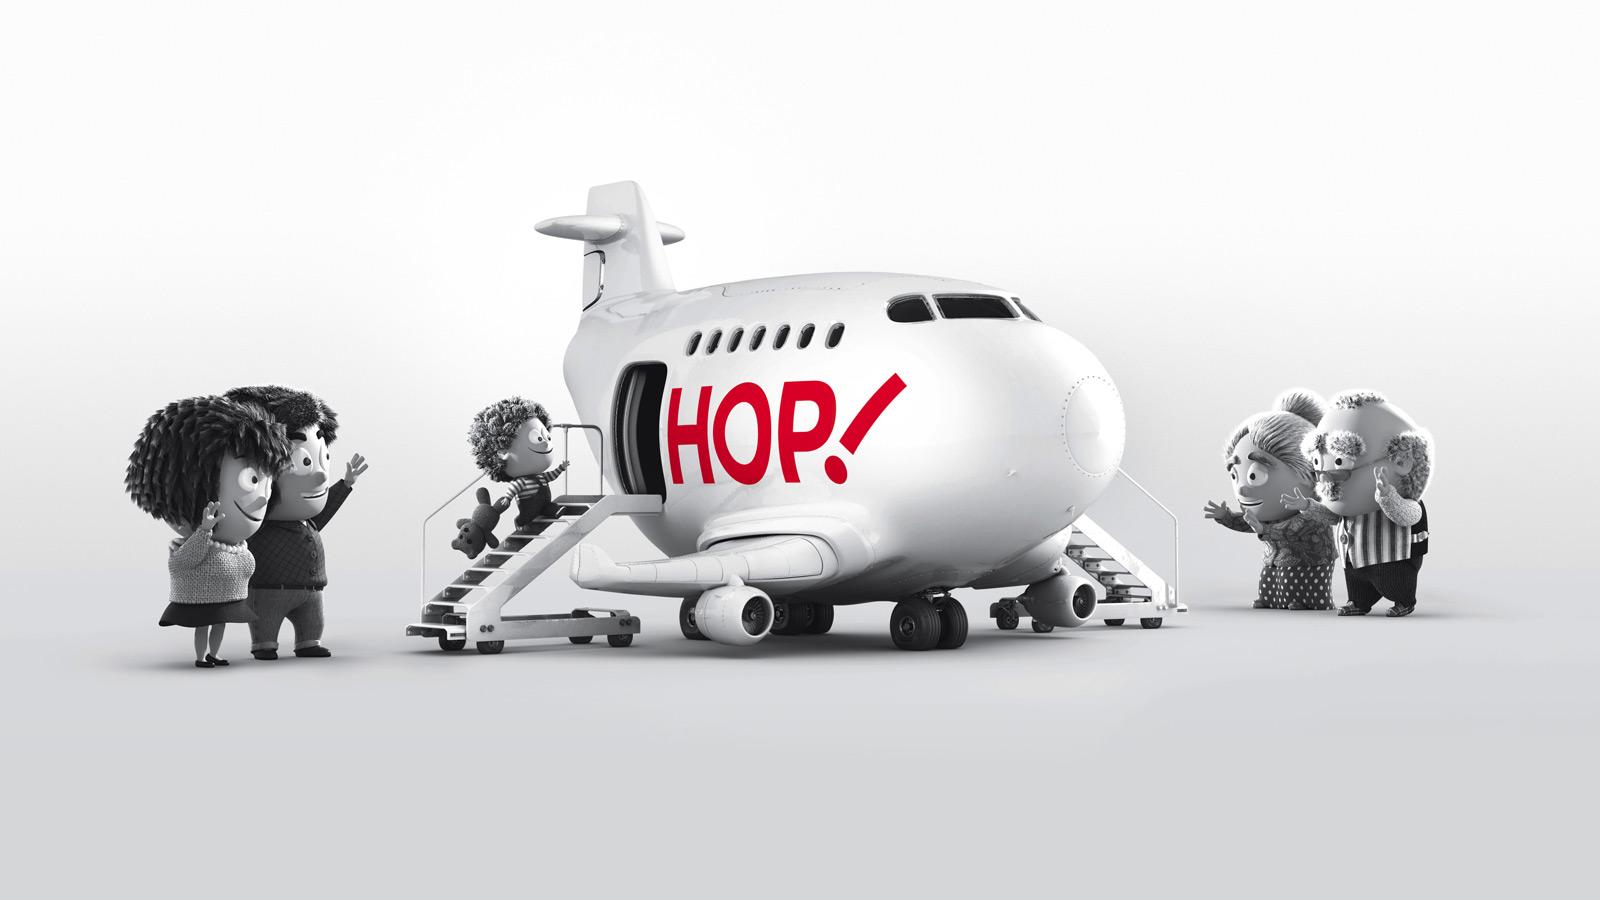 Air France | Campagne Hop!